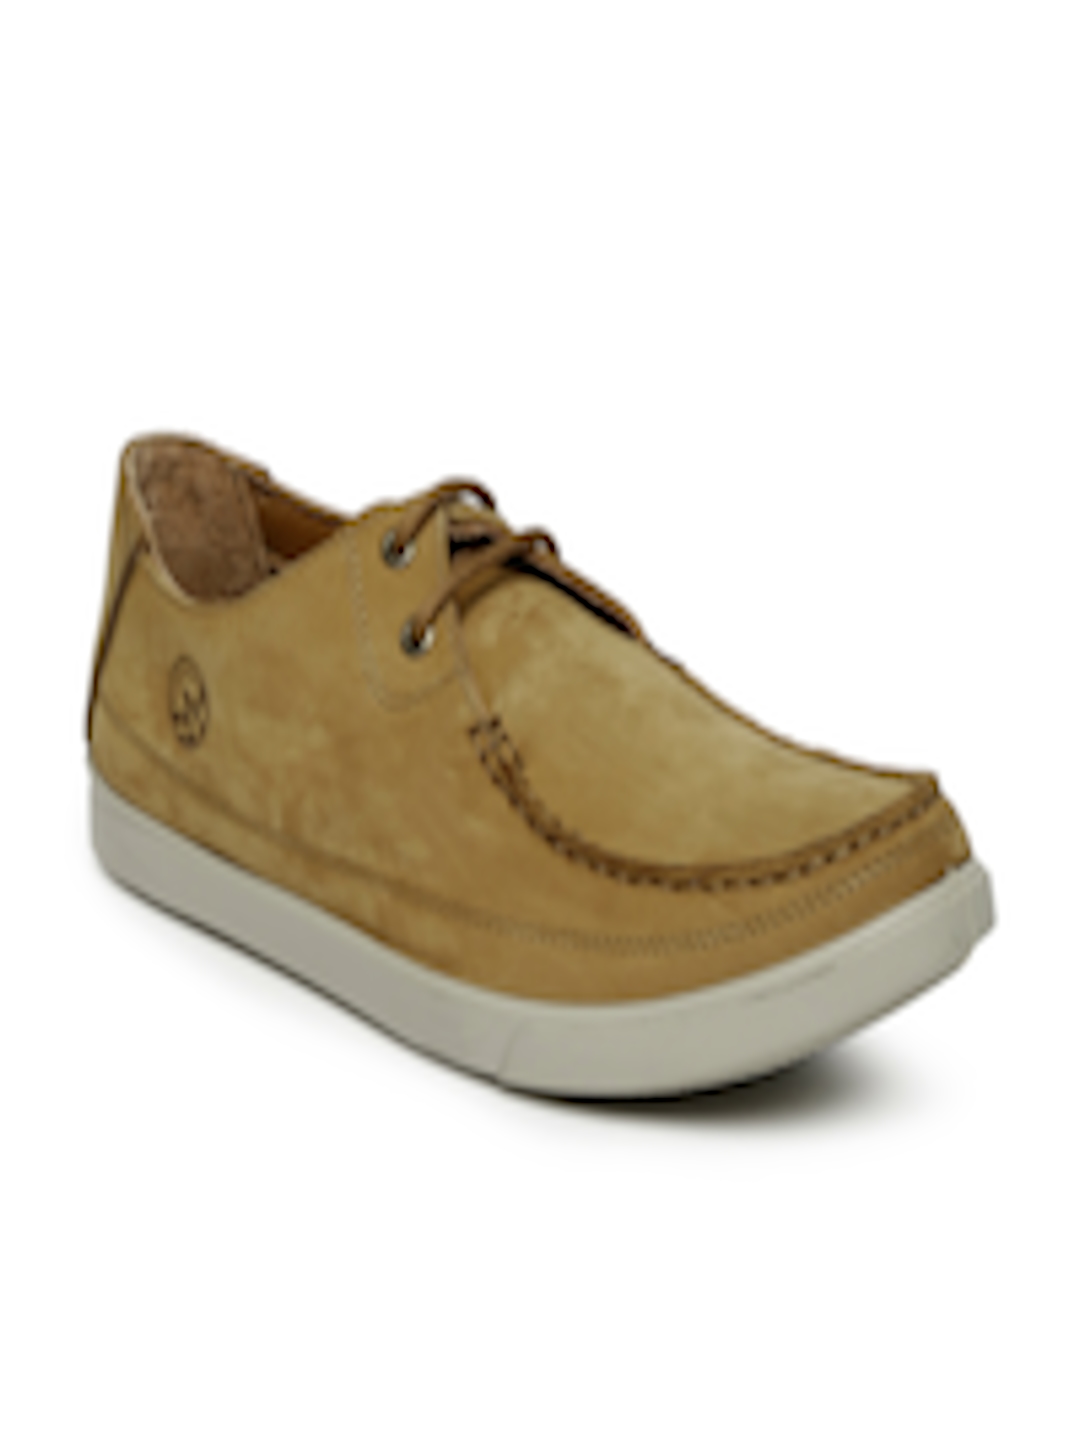 Buy Woodland Men Tan Sneakers - Casual Shoes for Men 2518730 | Myntra